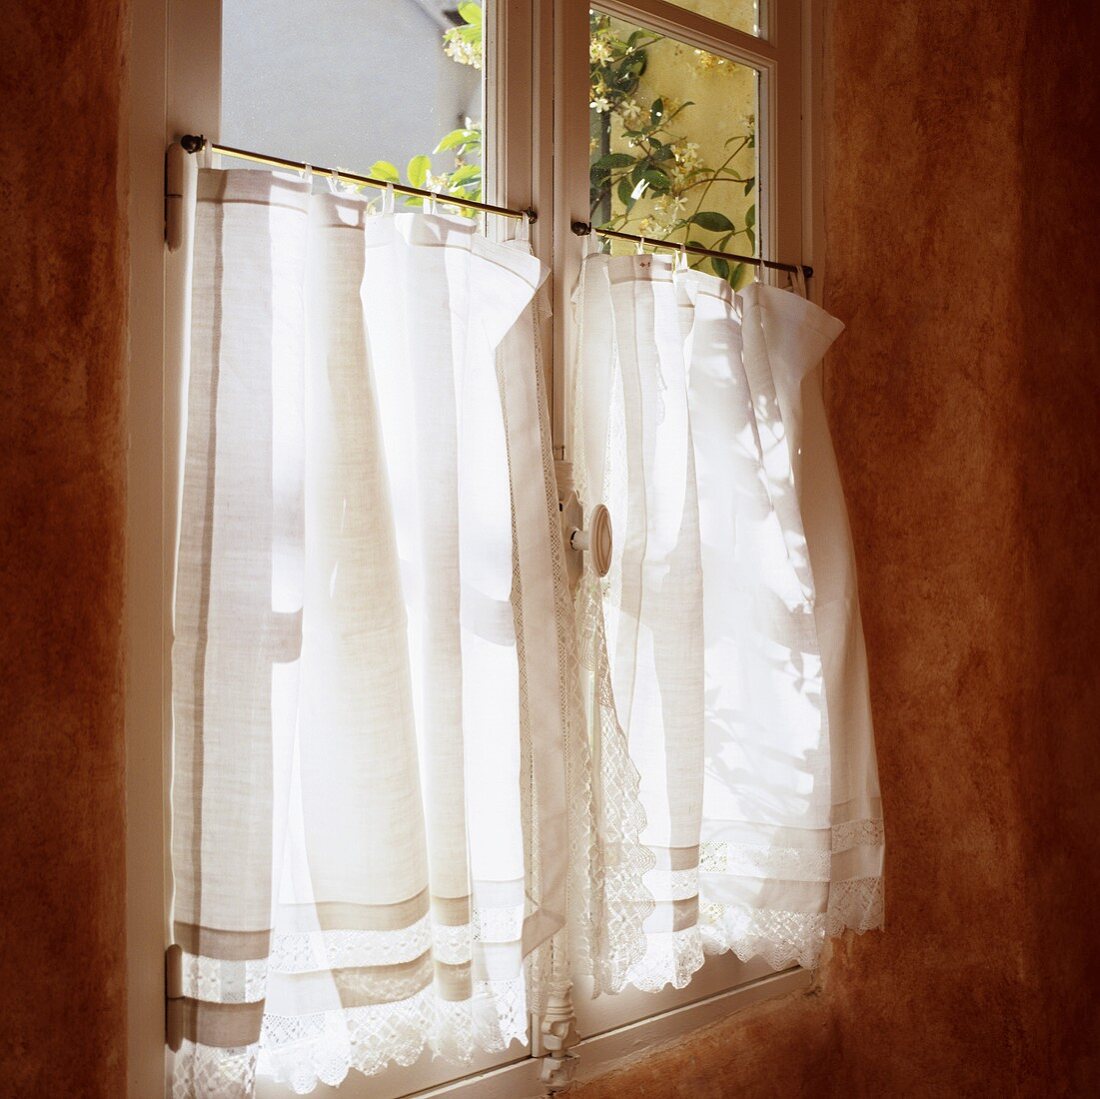 A white curtain at a window